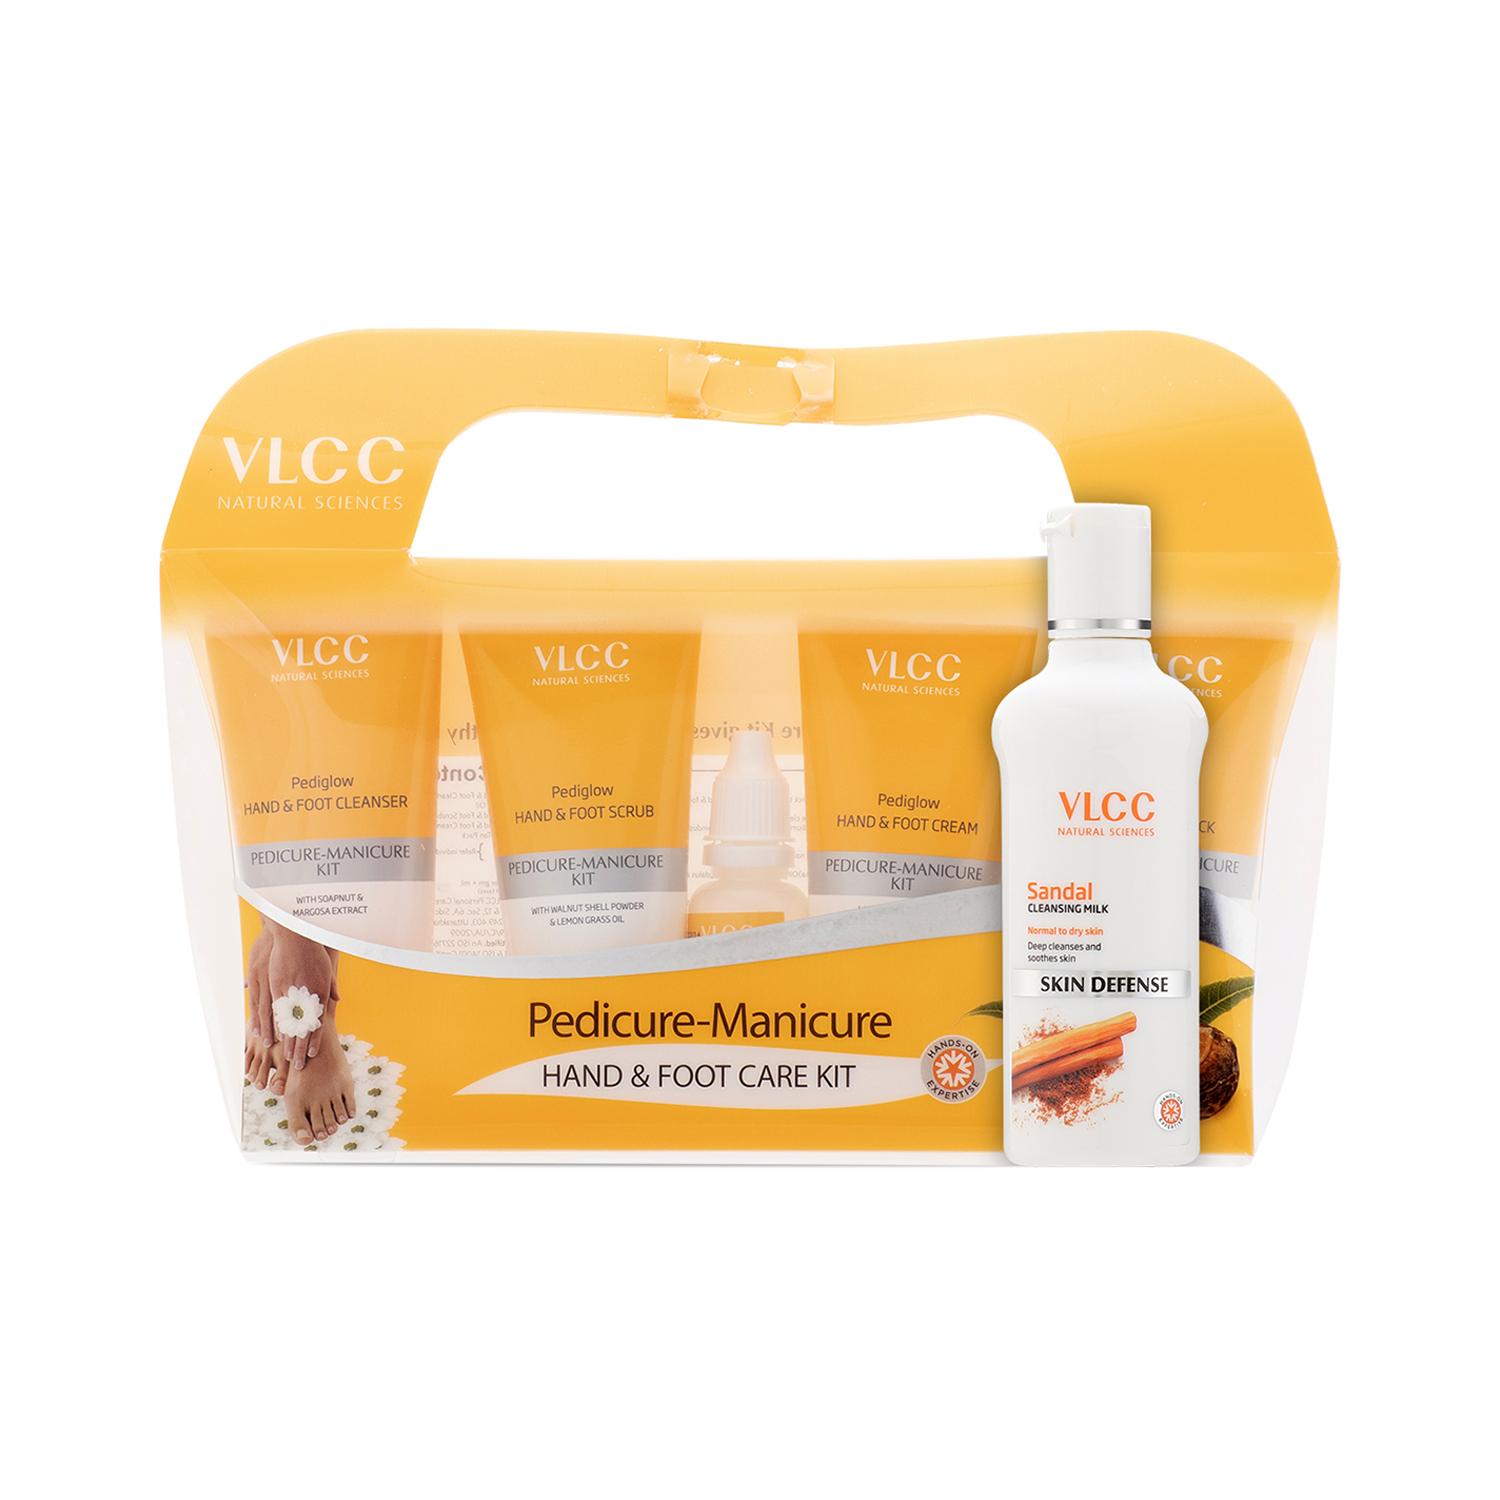 VLCC | VLCC Sandal Cleansing Milk & Pedicure-Manicure Kit